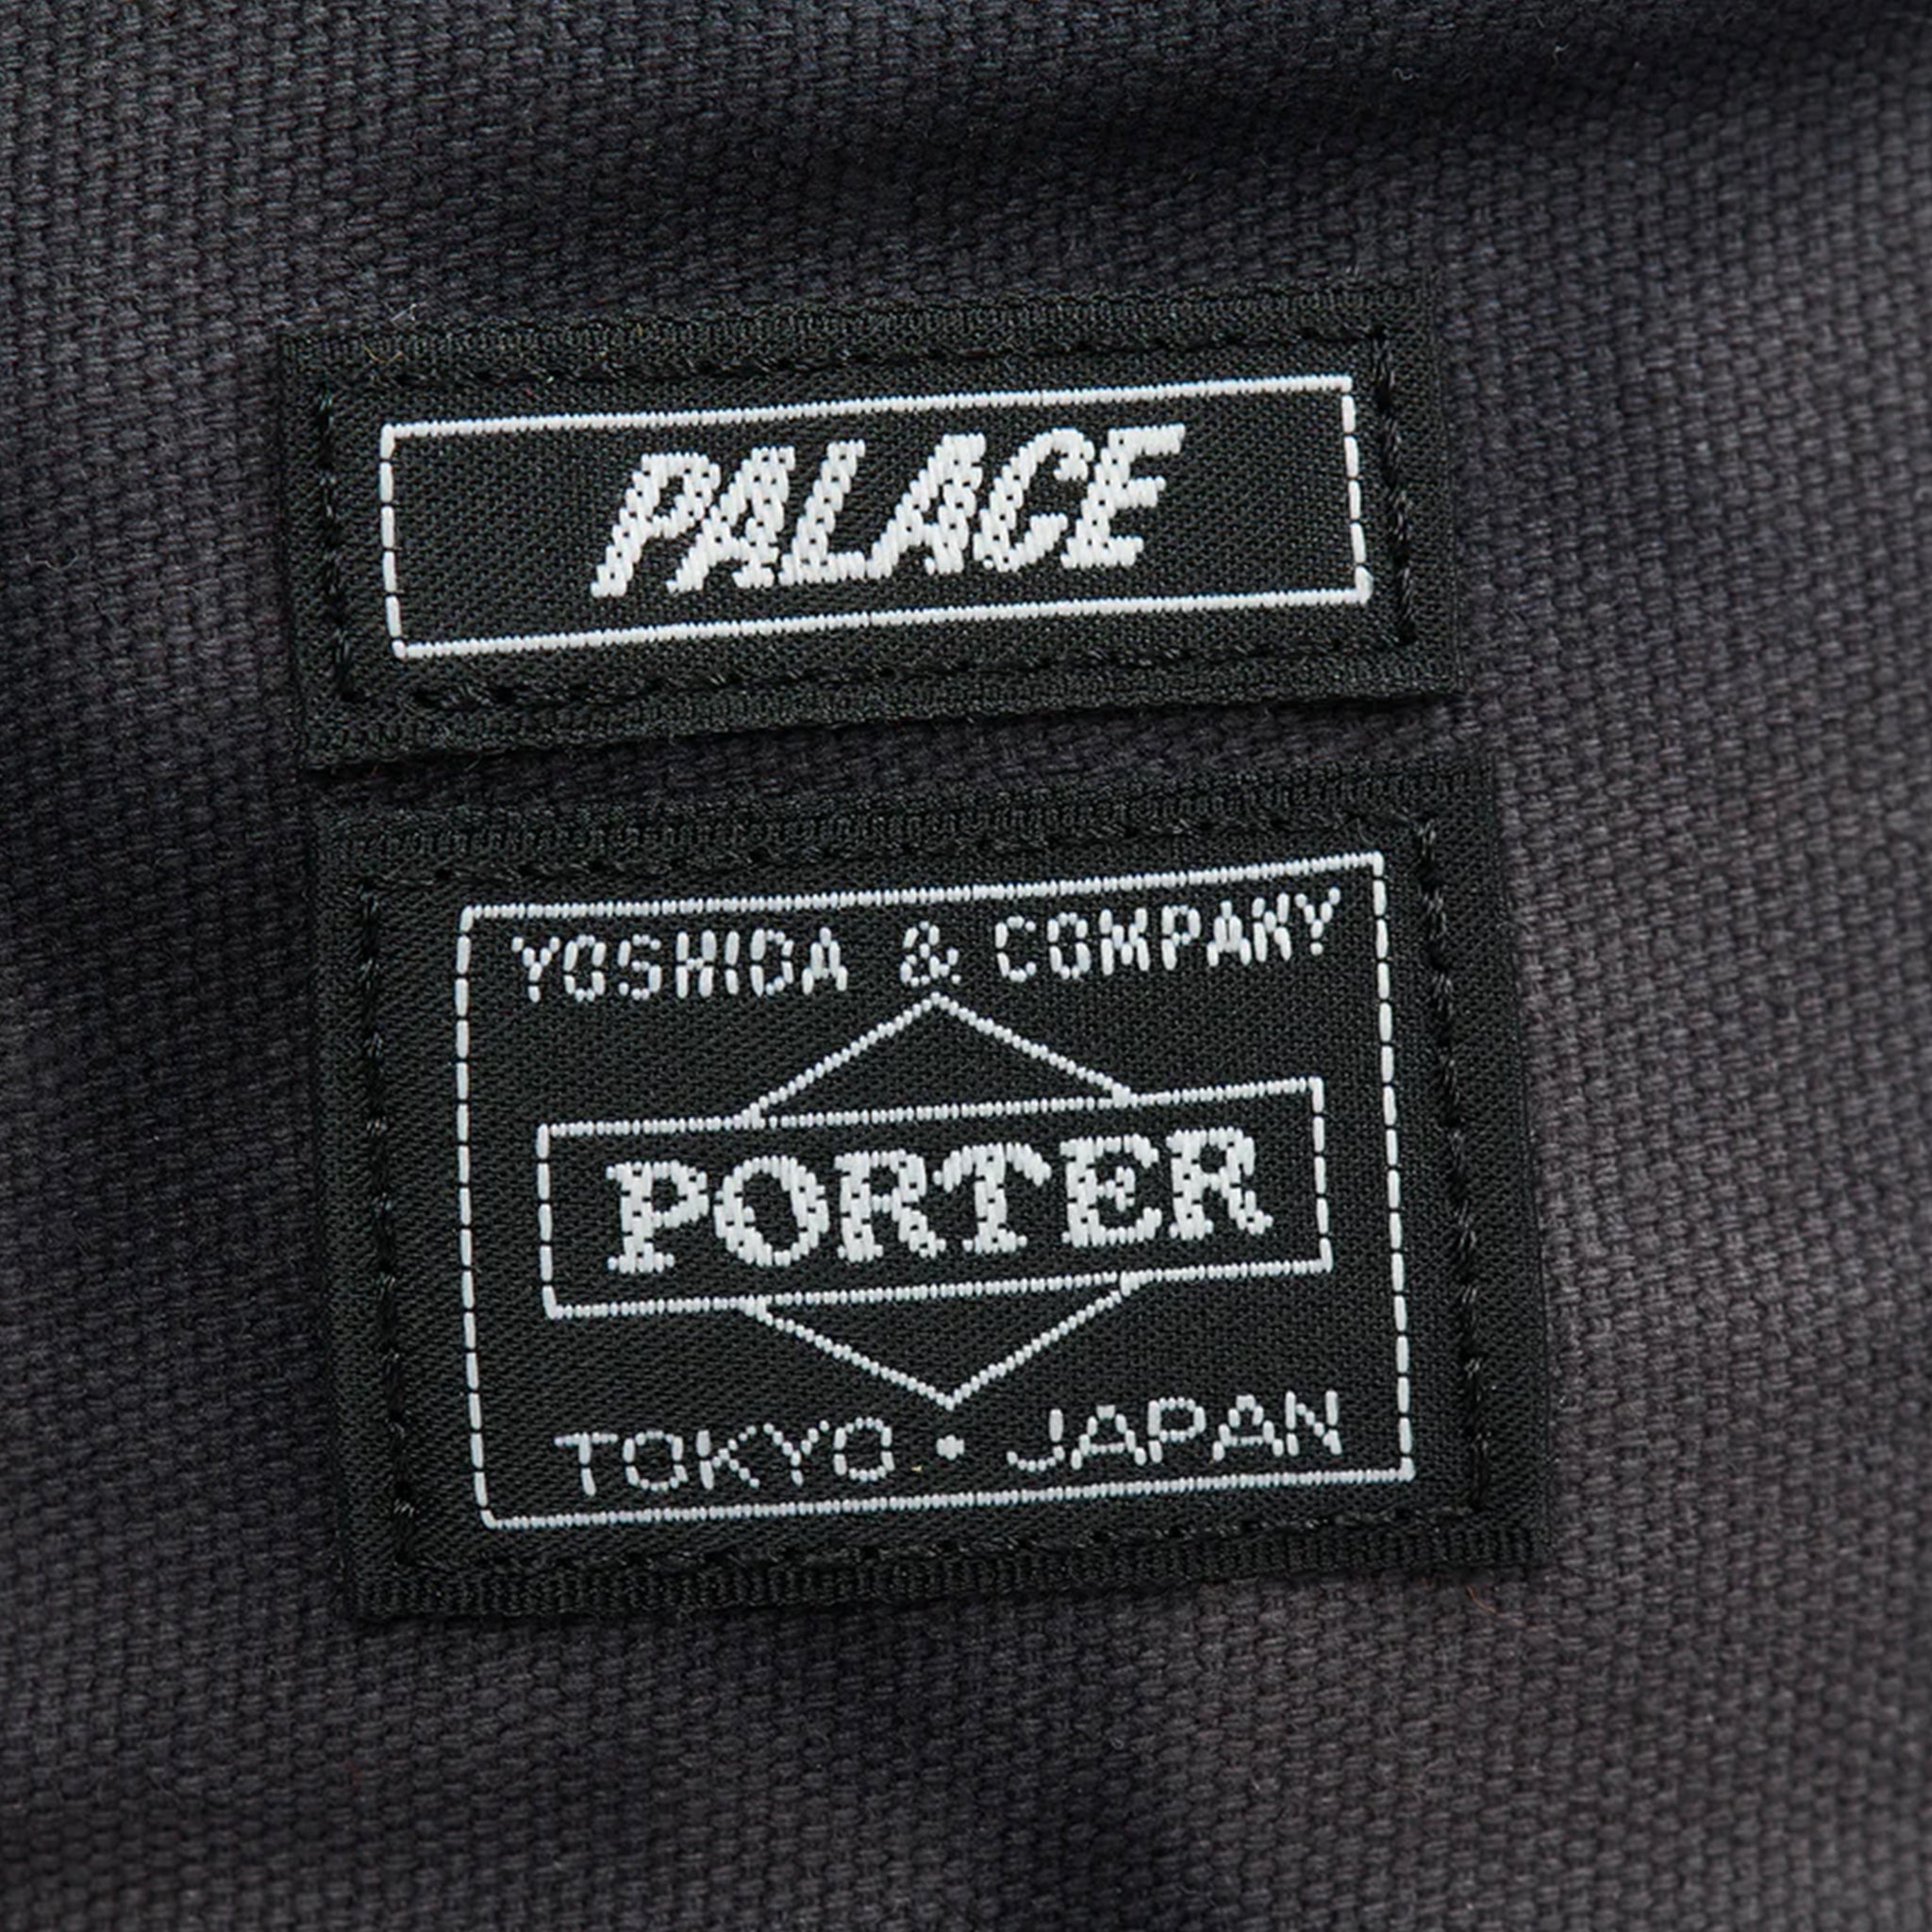 Palace x Porter Bucket Hat Black Wave Dye